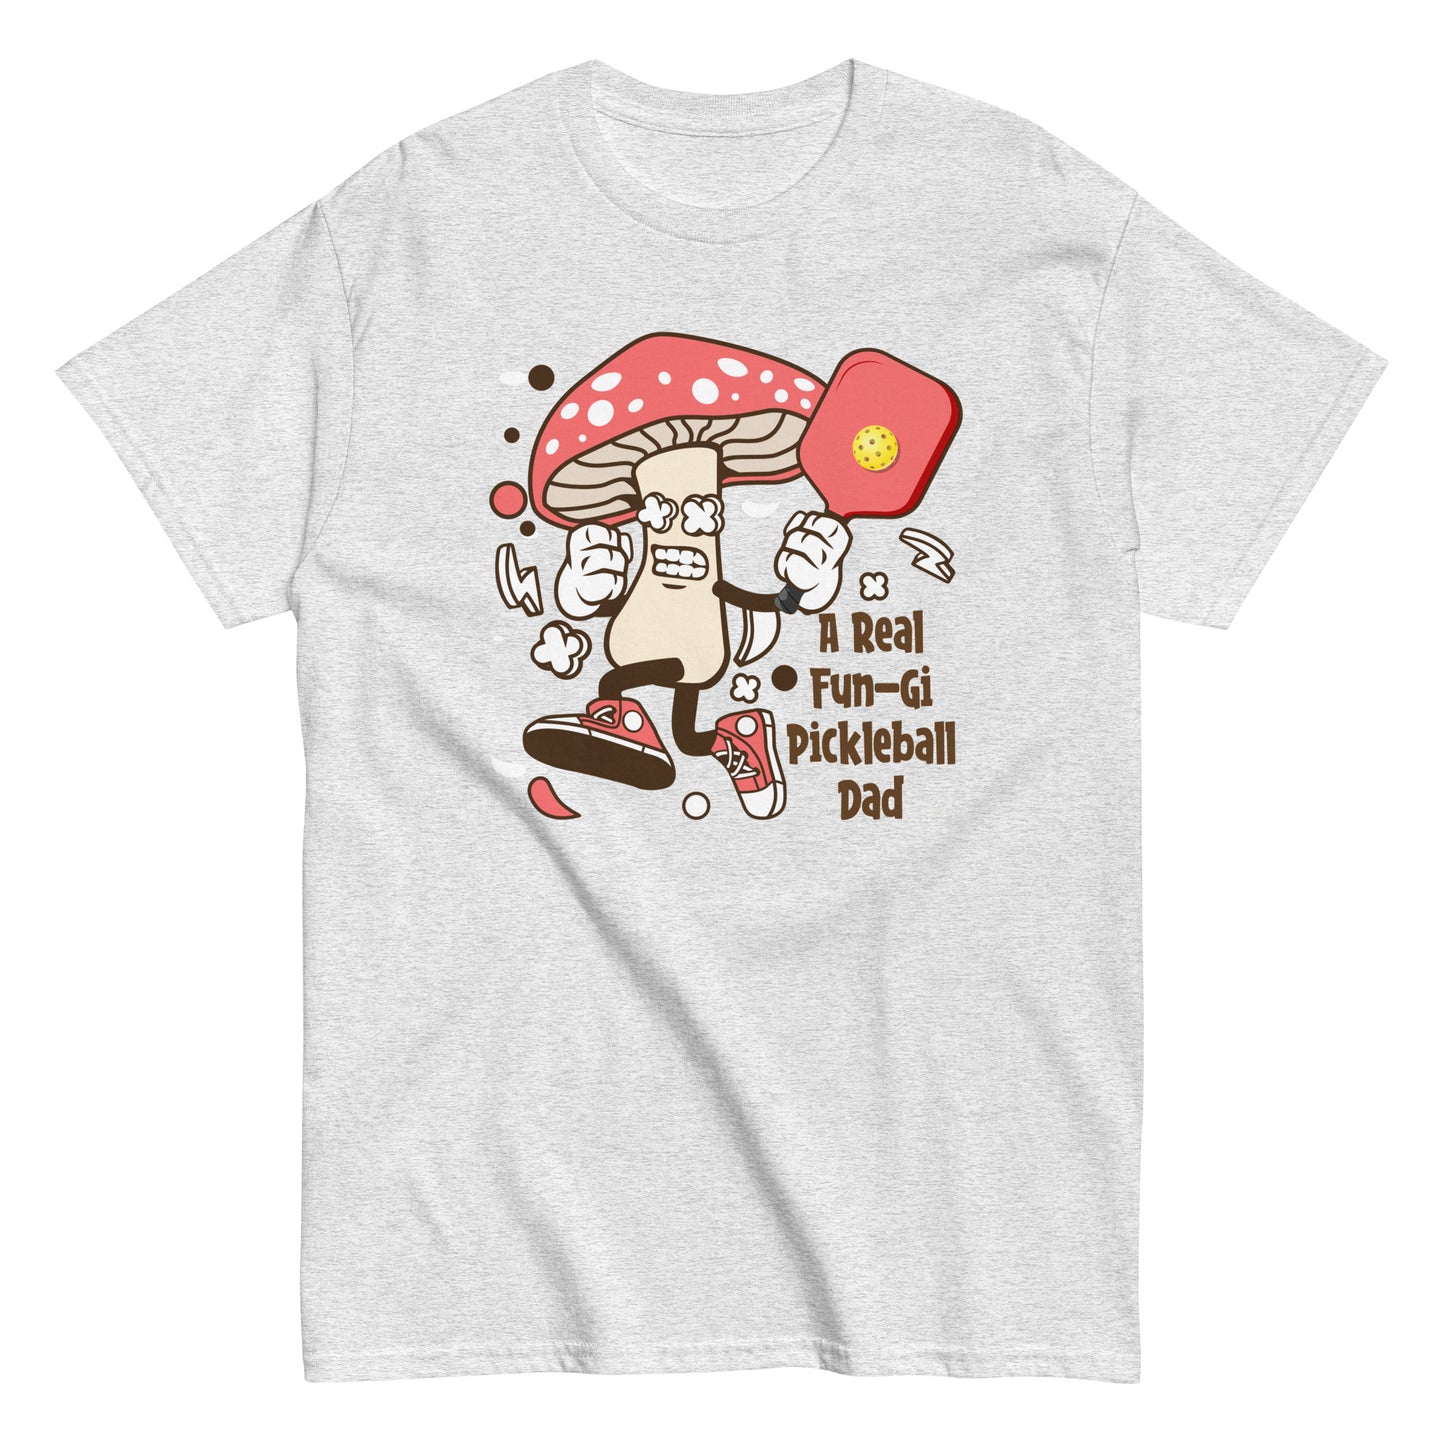 Retro Pickleball Pun: "A Real Fun-Gi Pickleball Dad", Father's Day Mens T-Shirt